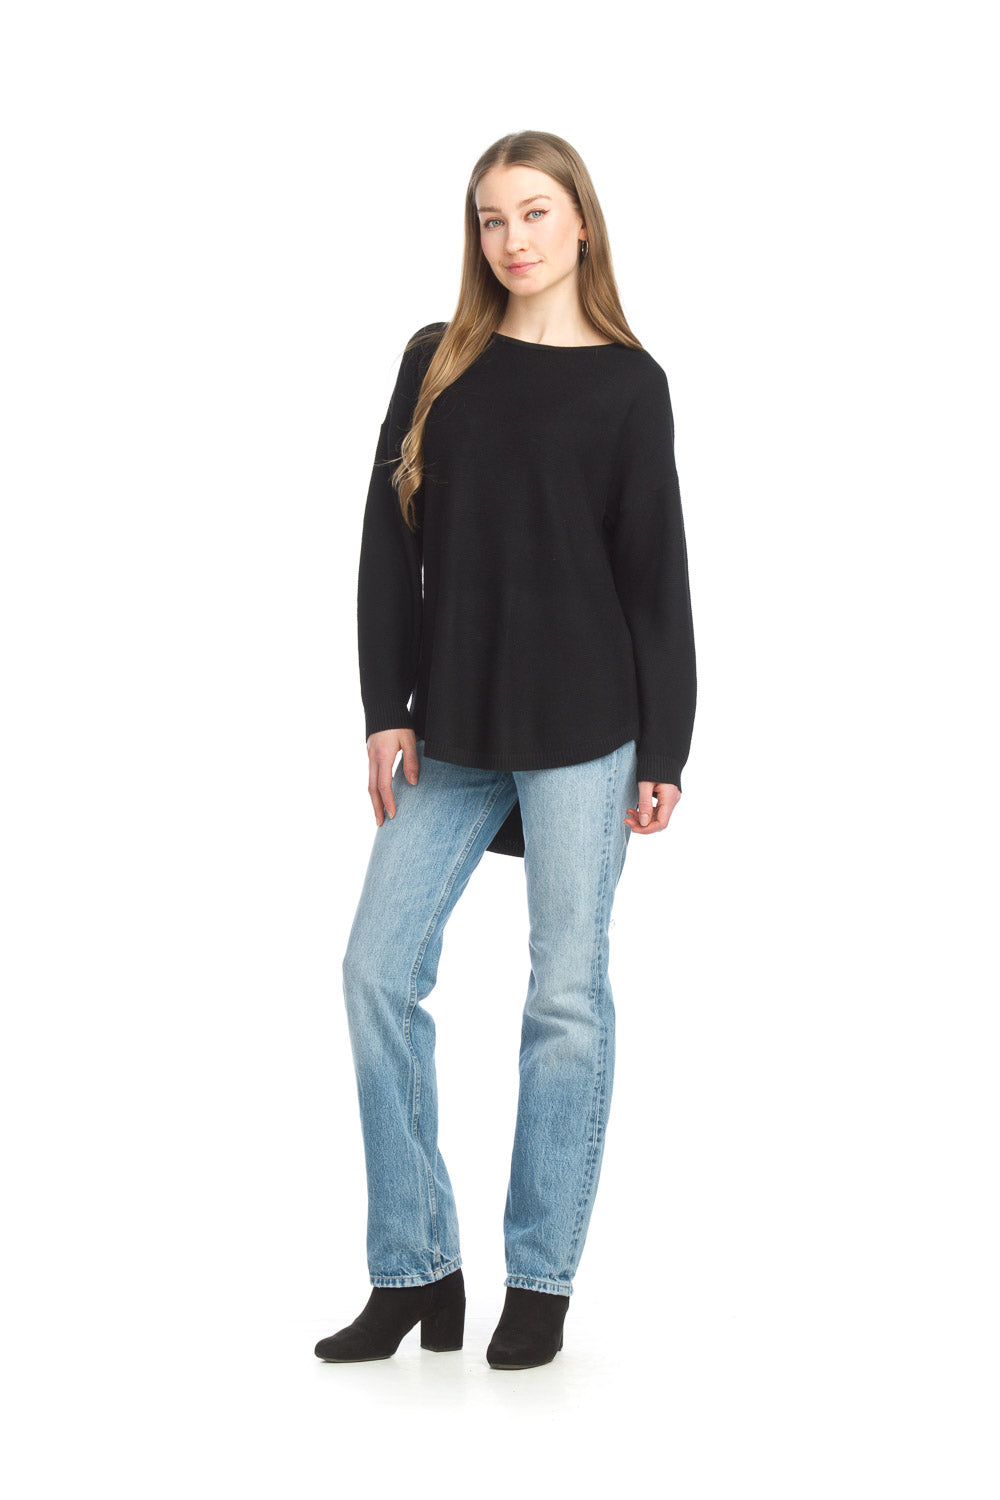 ST-13205 - Black -Shirt Hem Sweater